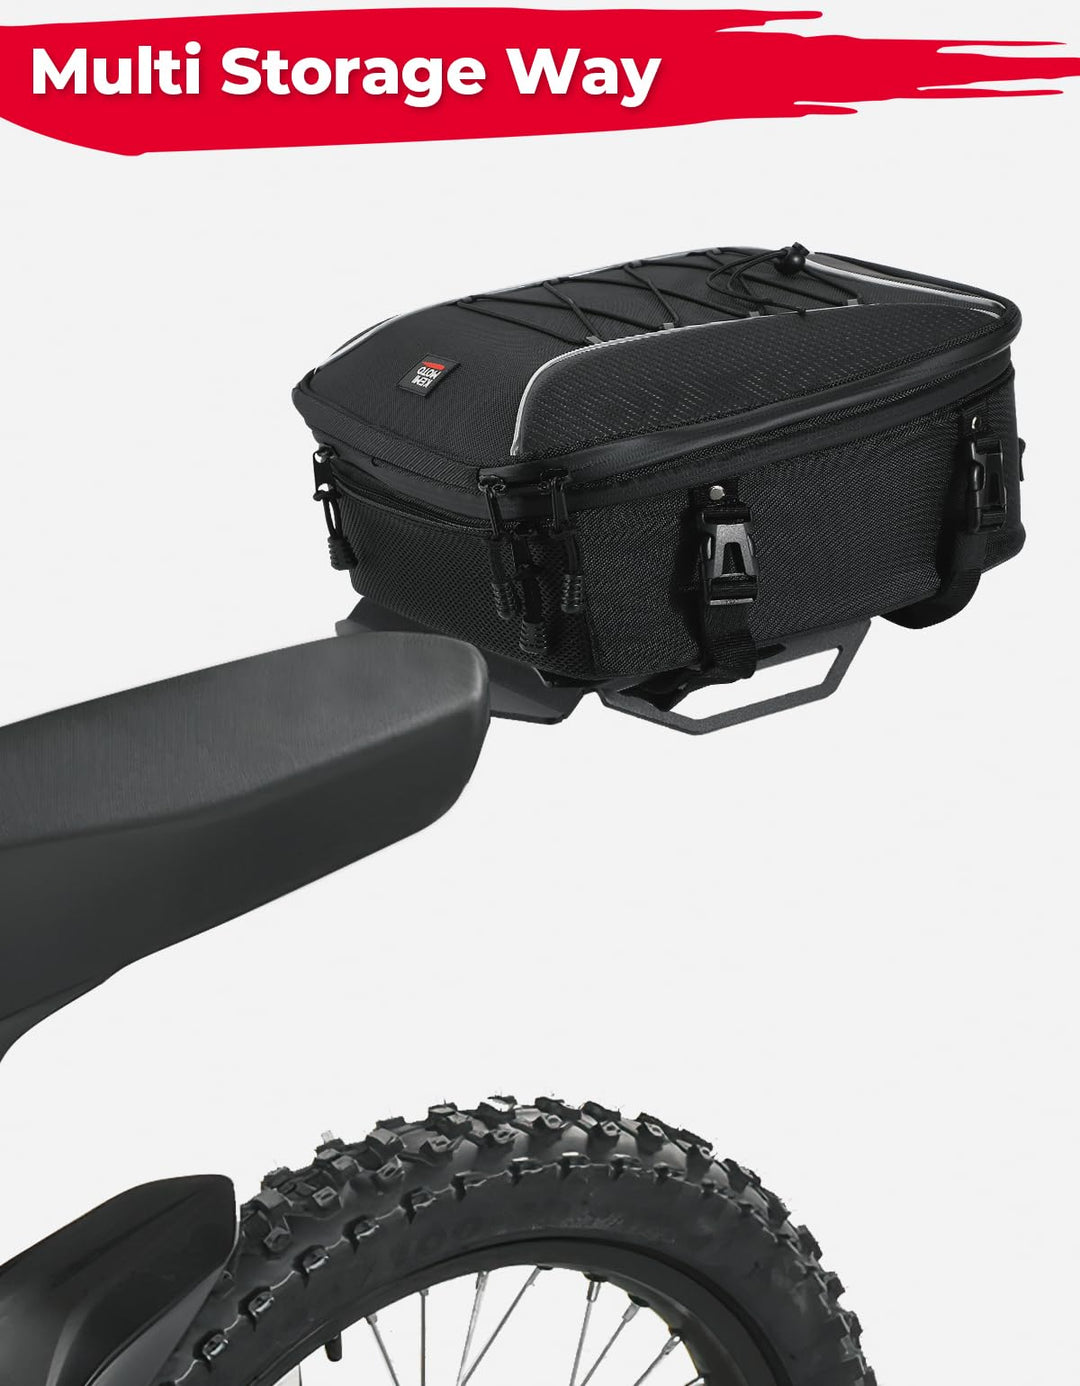 Motorcycle/eBike Rear Luggage Rack for Talaria Sting MX3 MX4